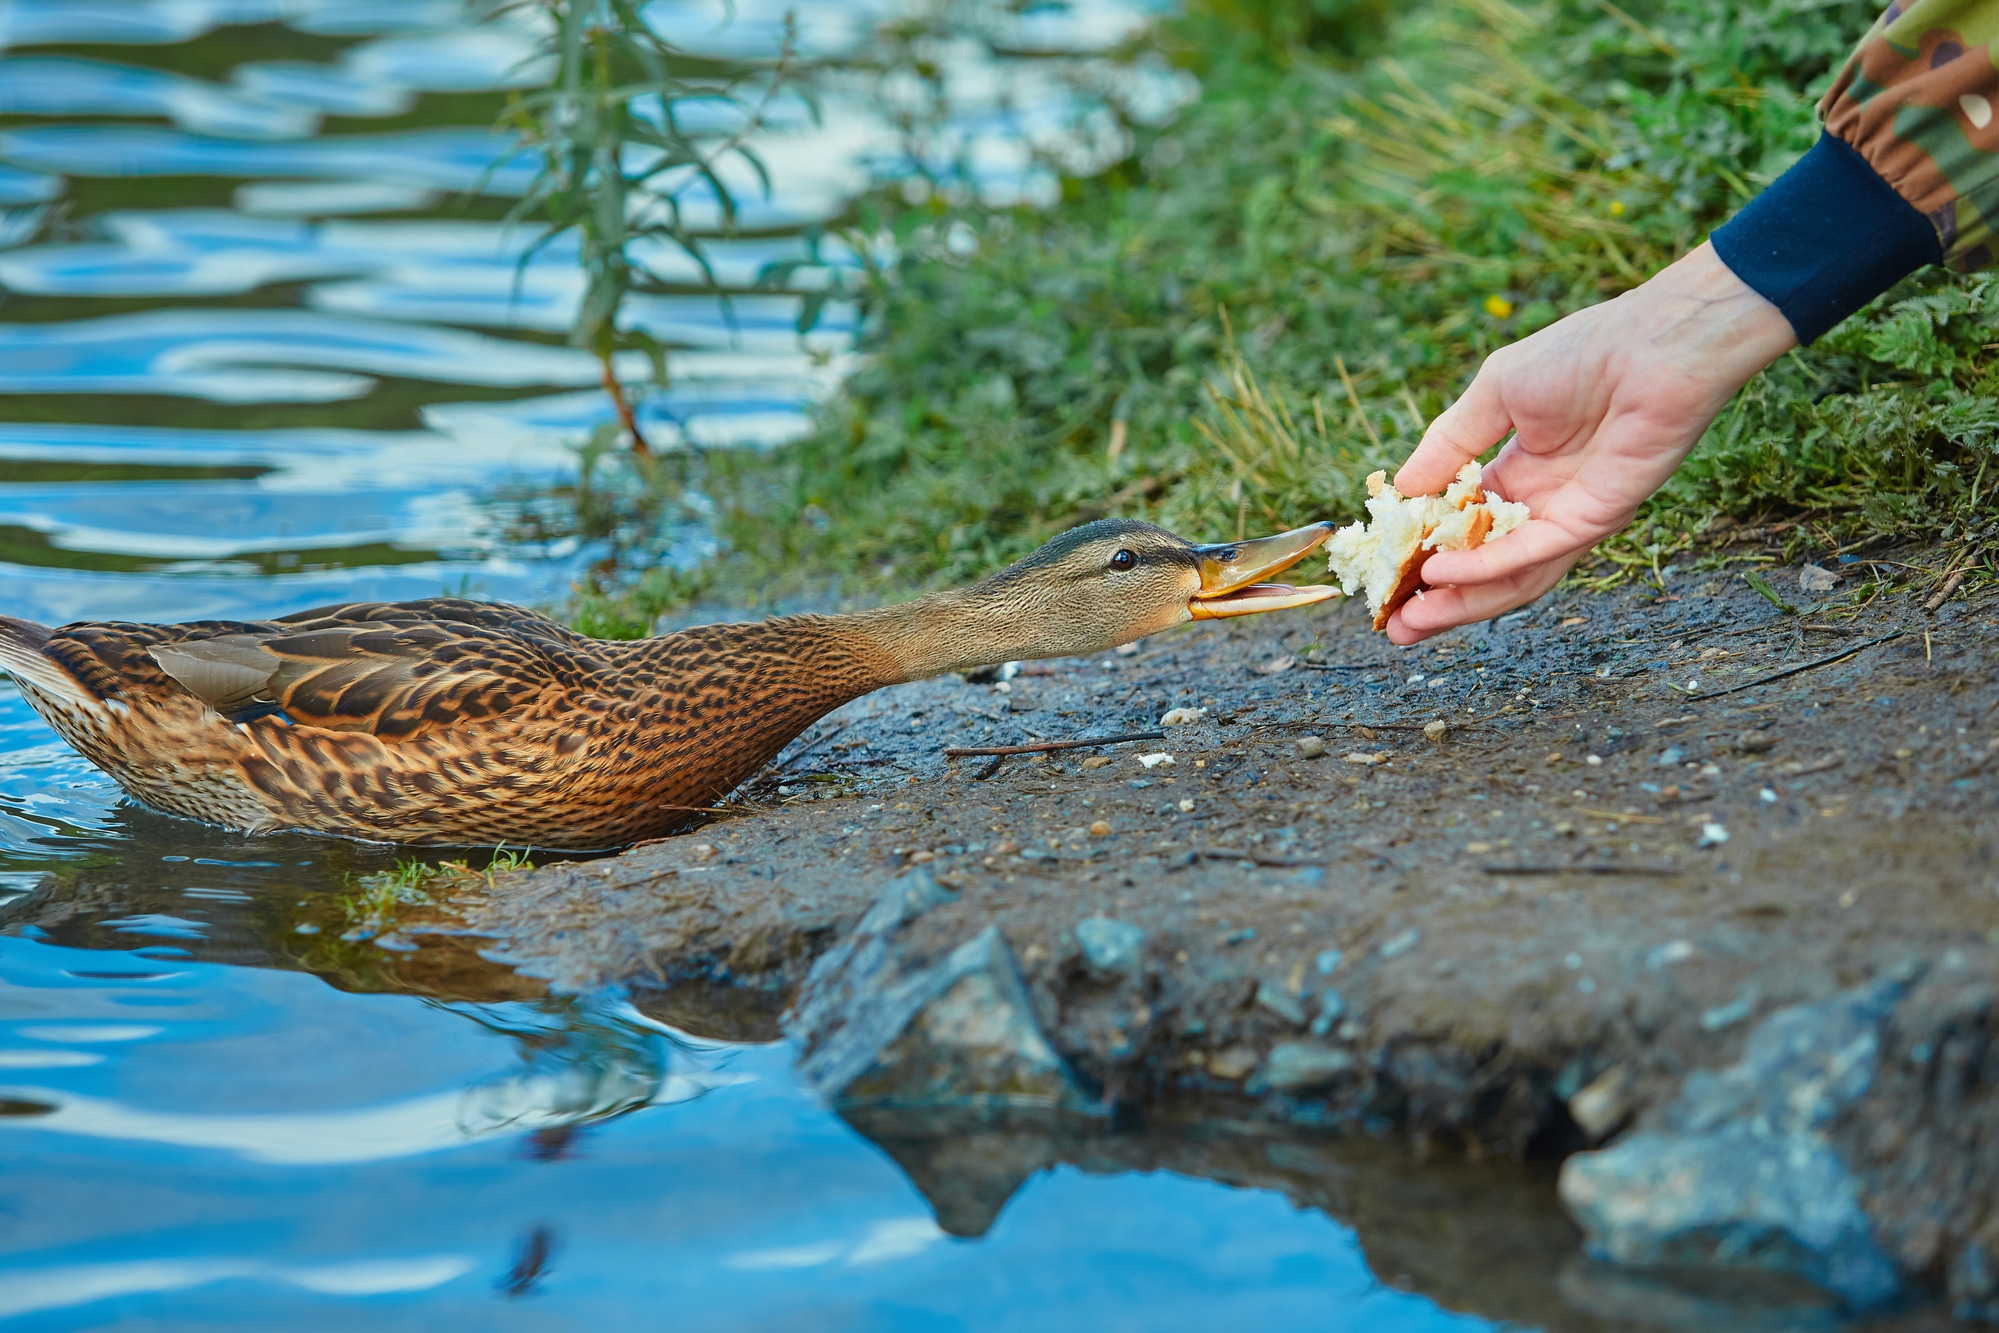 Human feeds a wild duck white bread.